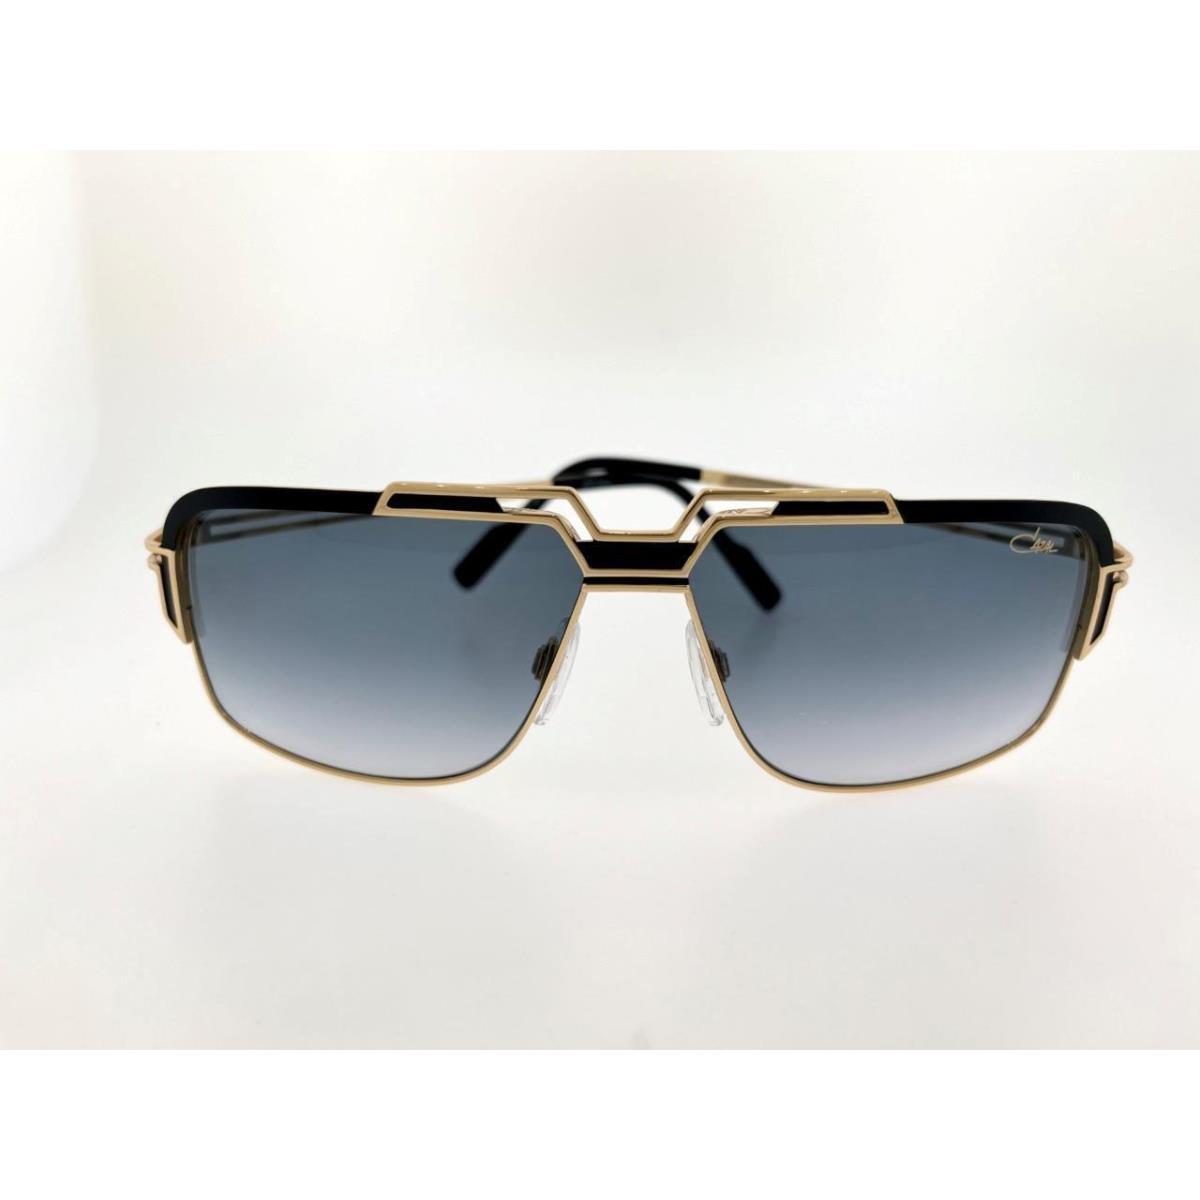 Cazal Sunglasses 9103 001 61MM Black Gold Frame with Grey Gradient Lenses